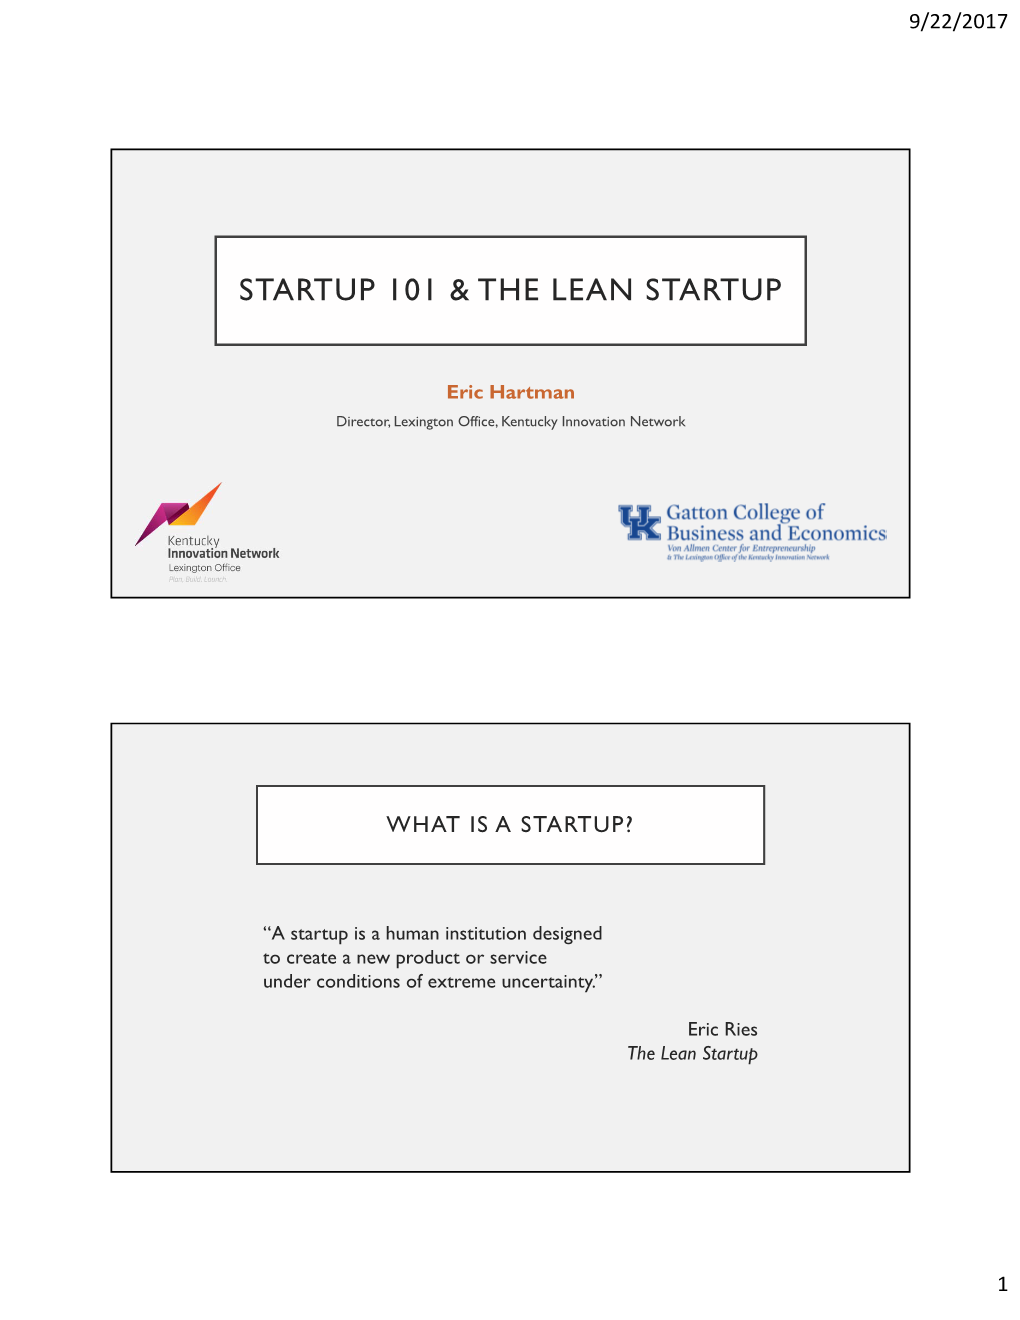 The Lean Startup Presentation